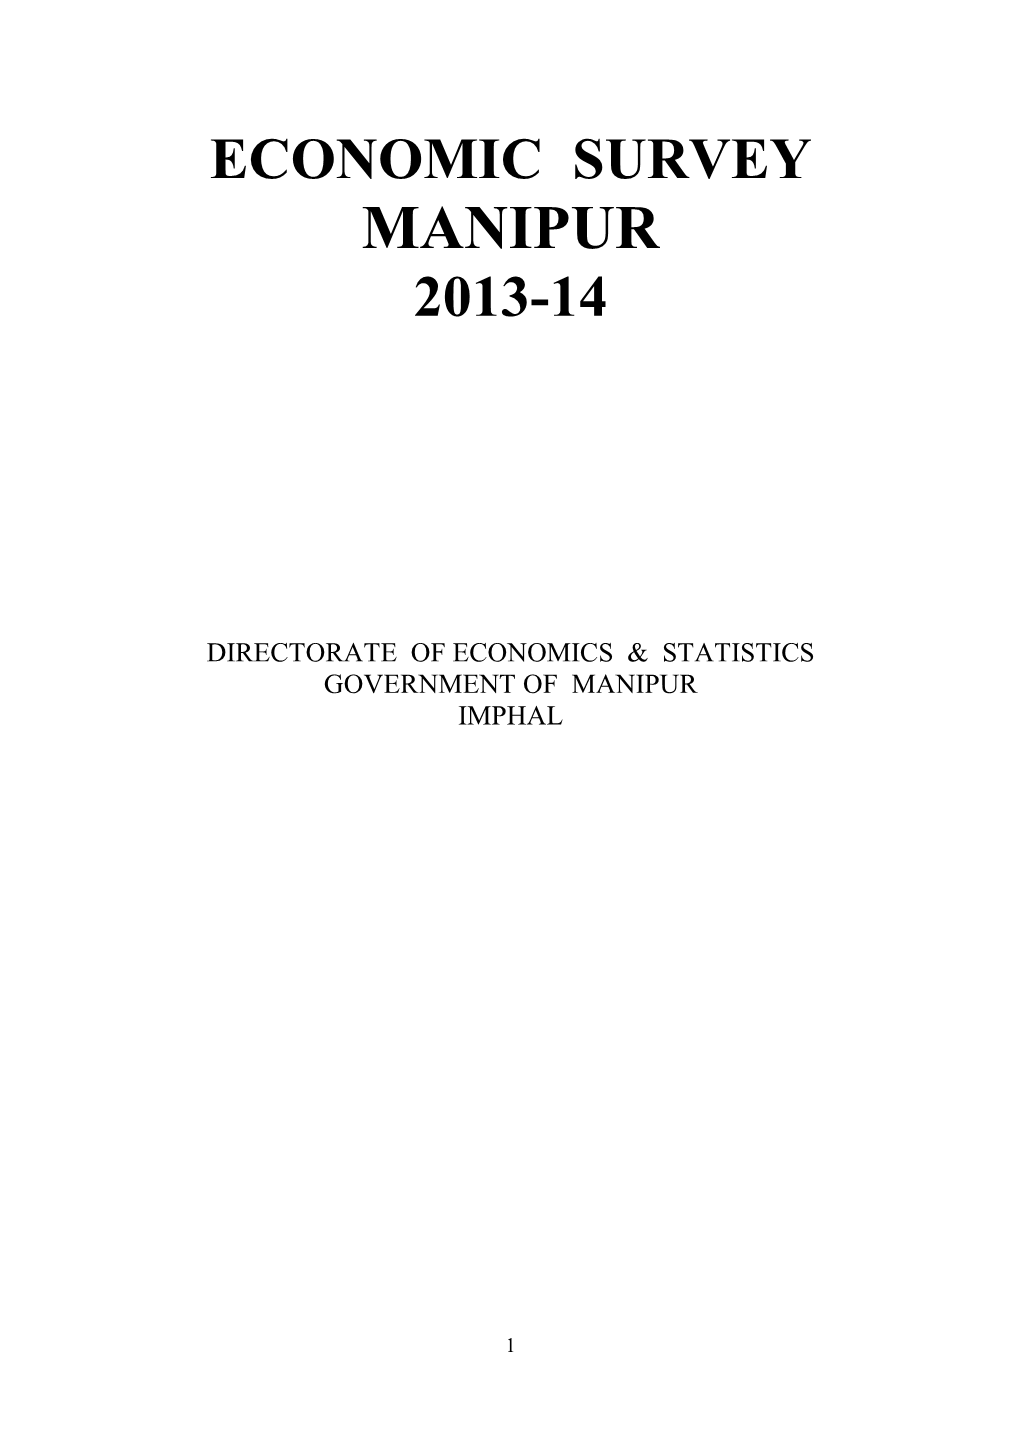 Manipur 2013-14